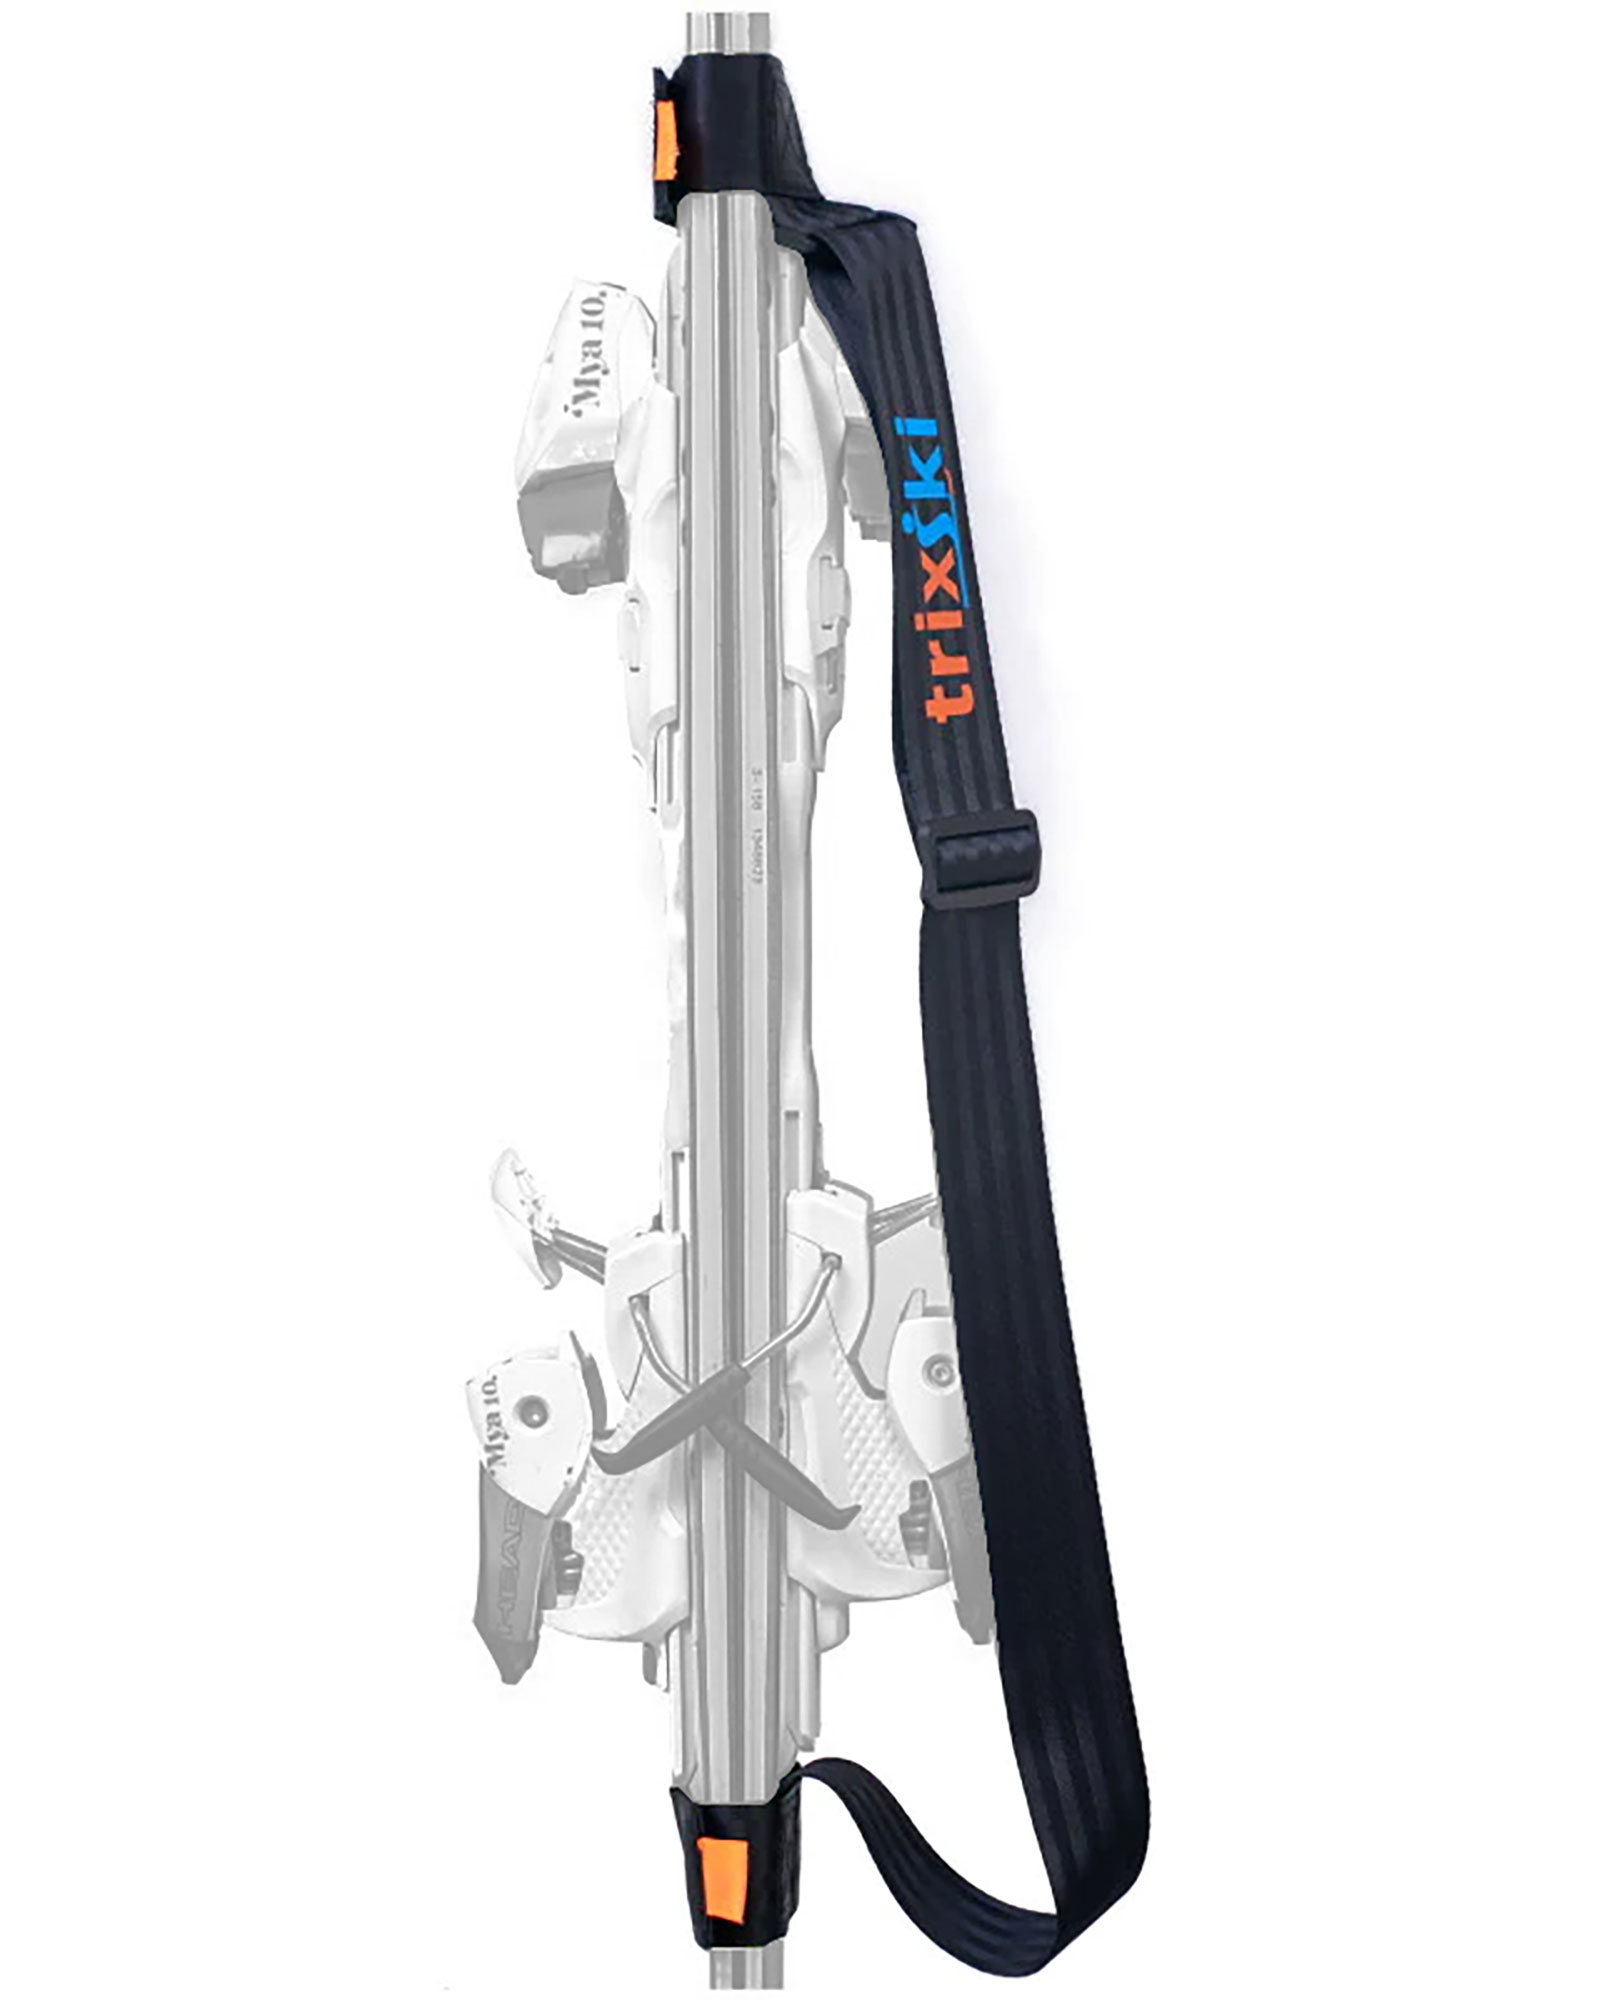 Trixski Ski Carrier - black